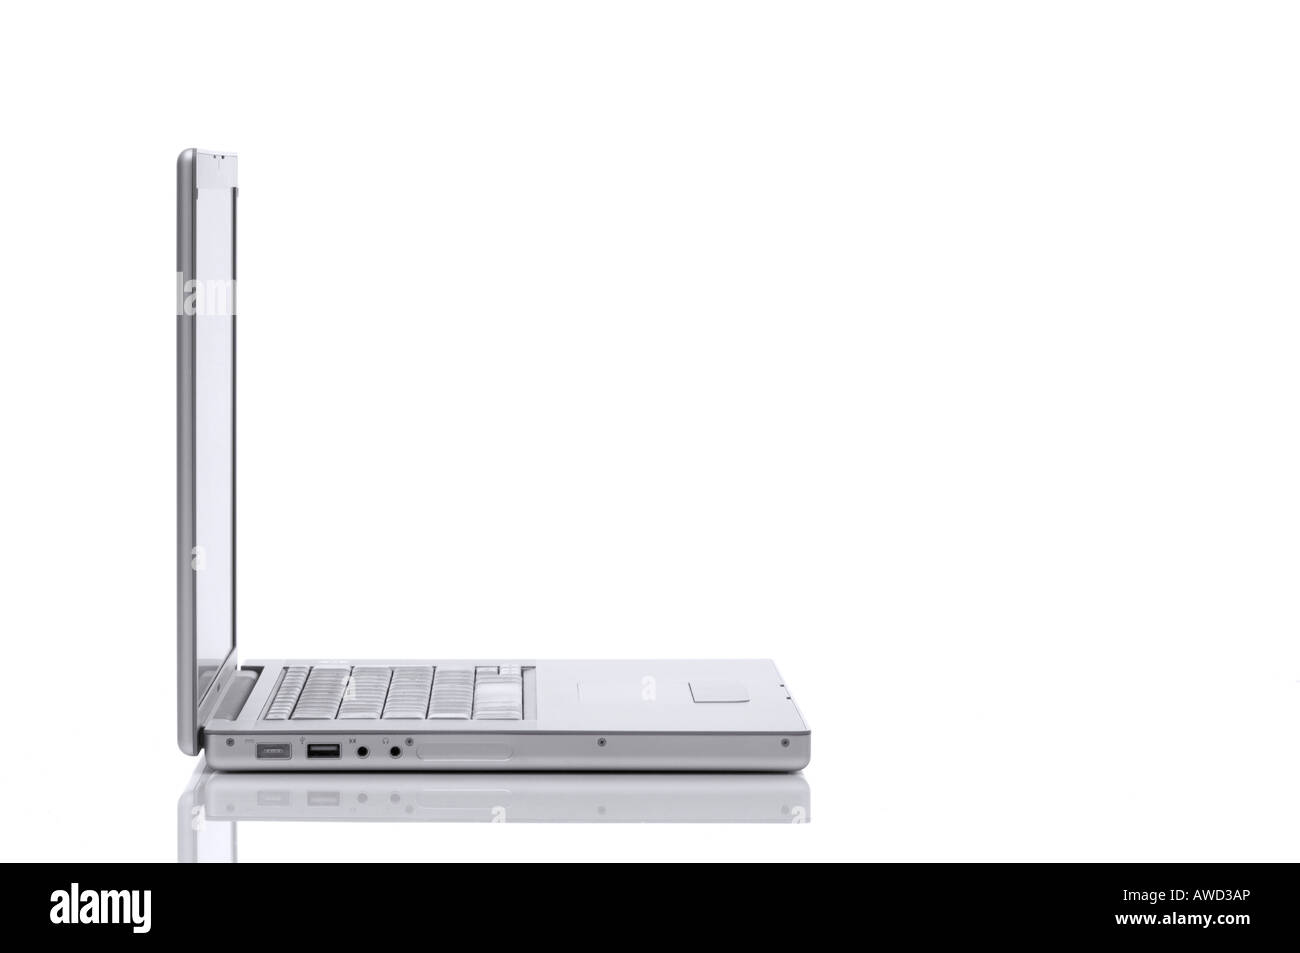 Apple MacBook Pro Laptop Stock Photo